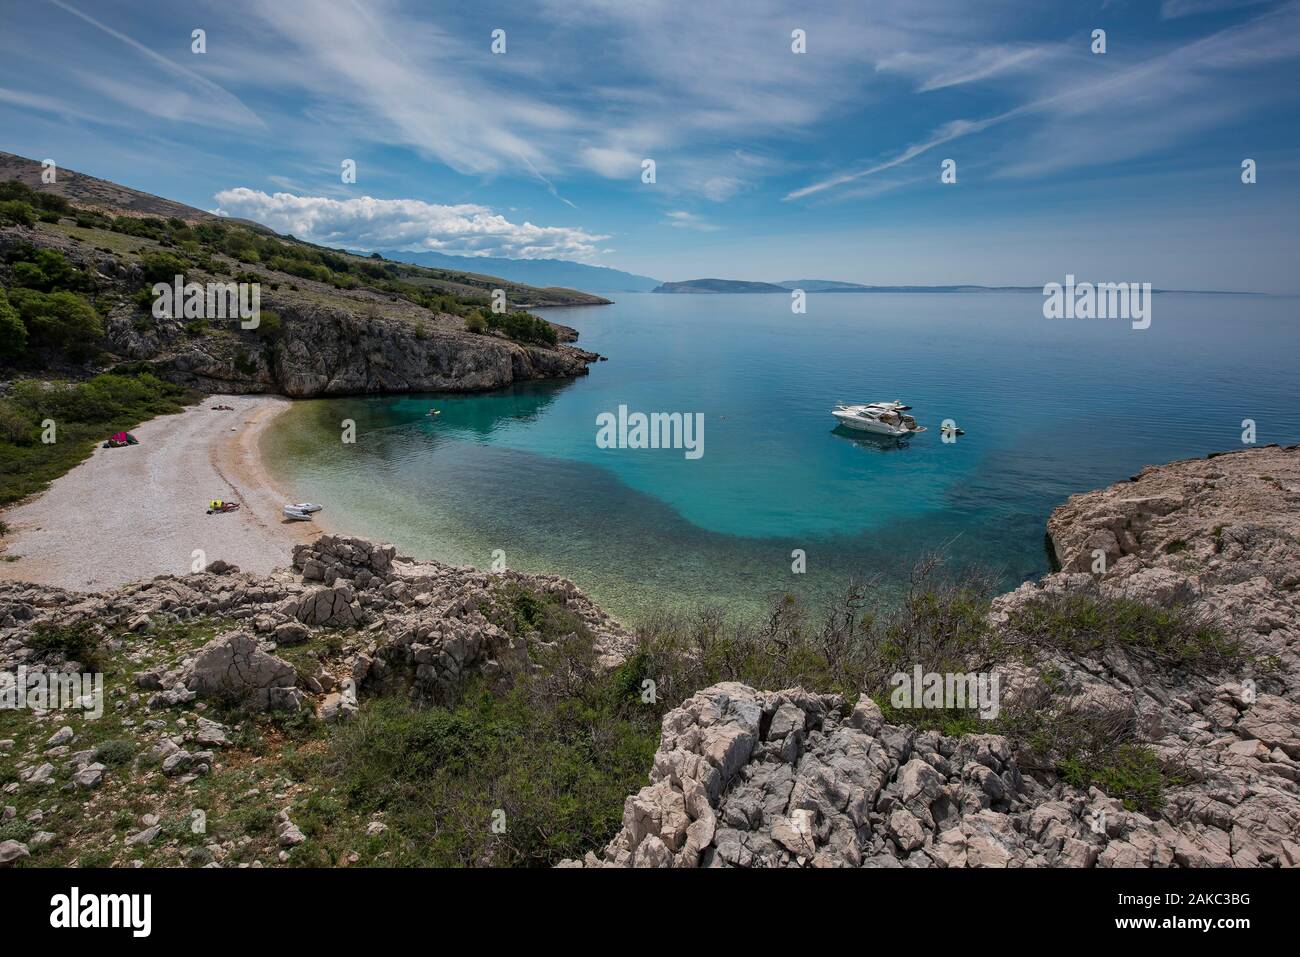 Croazia, nella contea di Primorje-Gorski Kotar, baia di Kvarner , Isola di Krk, Stara Baska, il paradise beach Uvala Zala Foto Stock